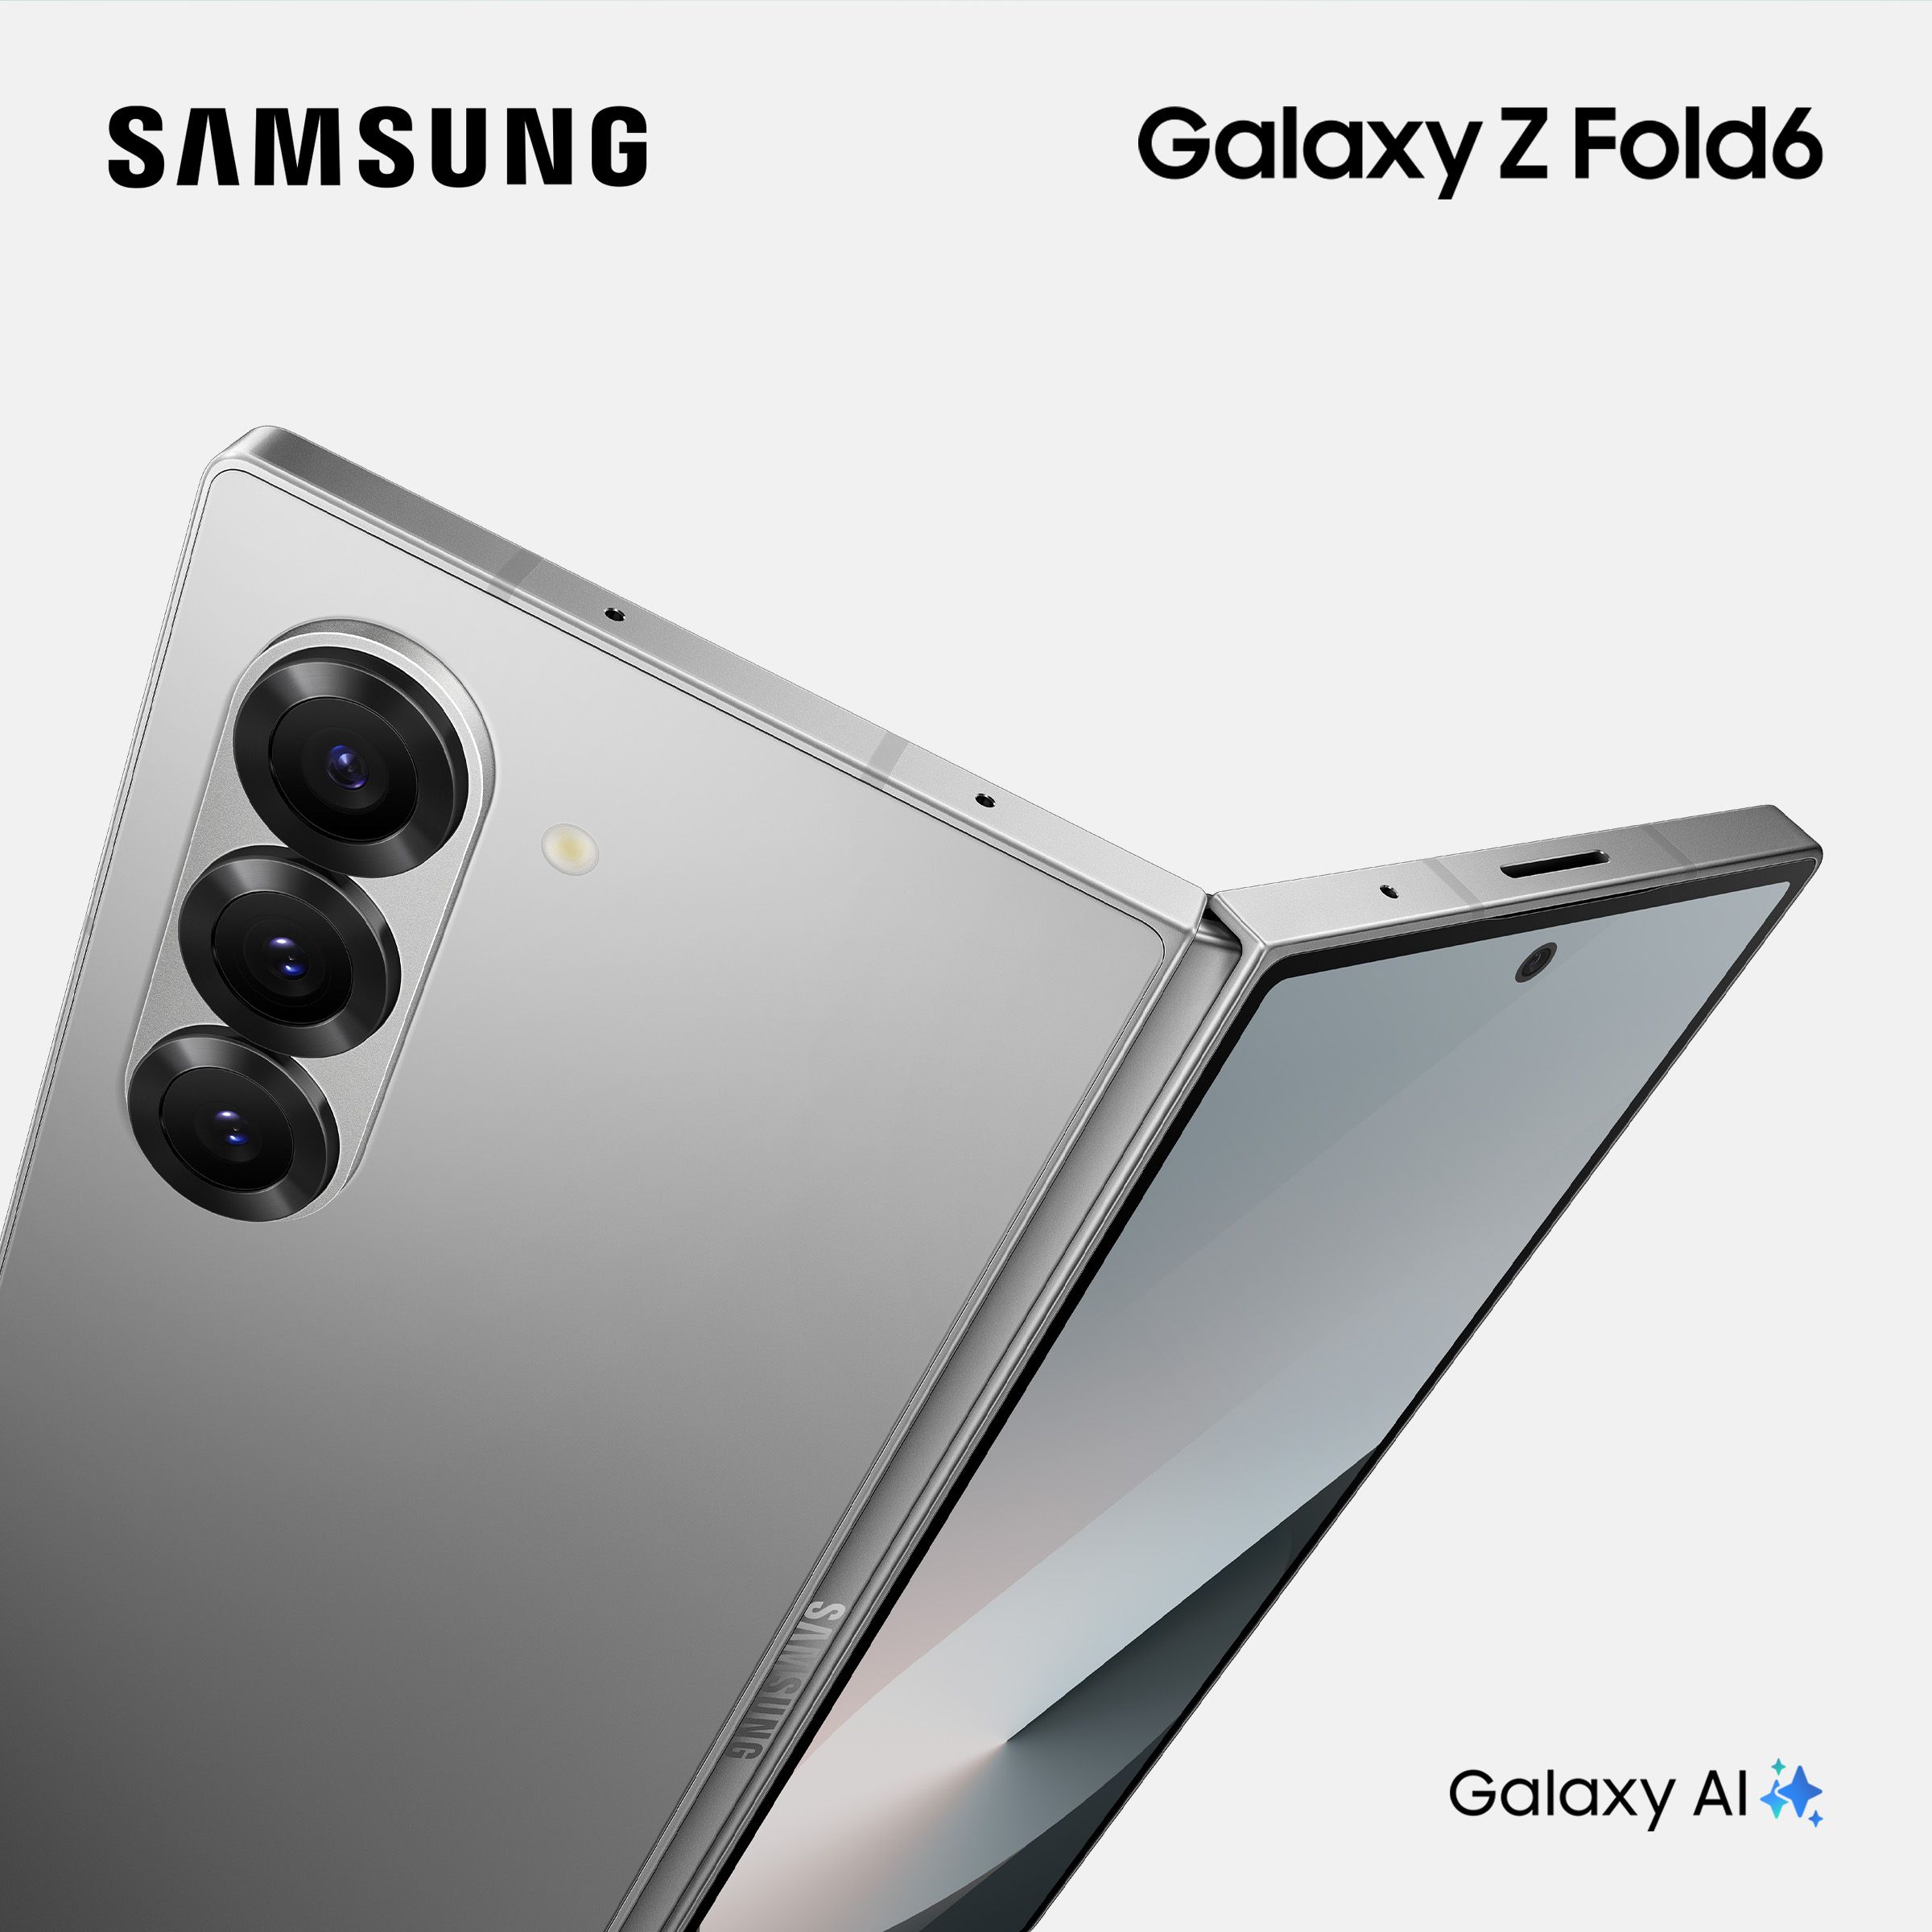 samsung Galaxy Z Fold6 phone